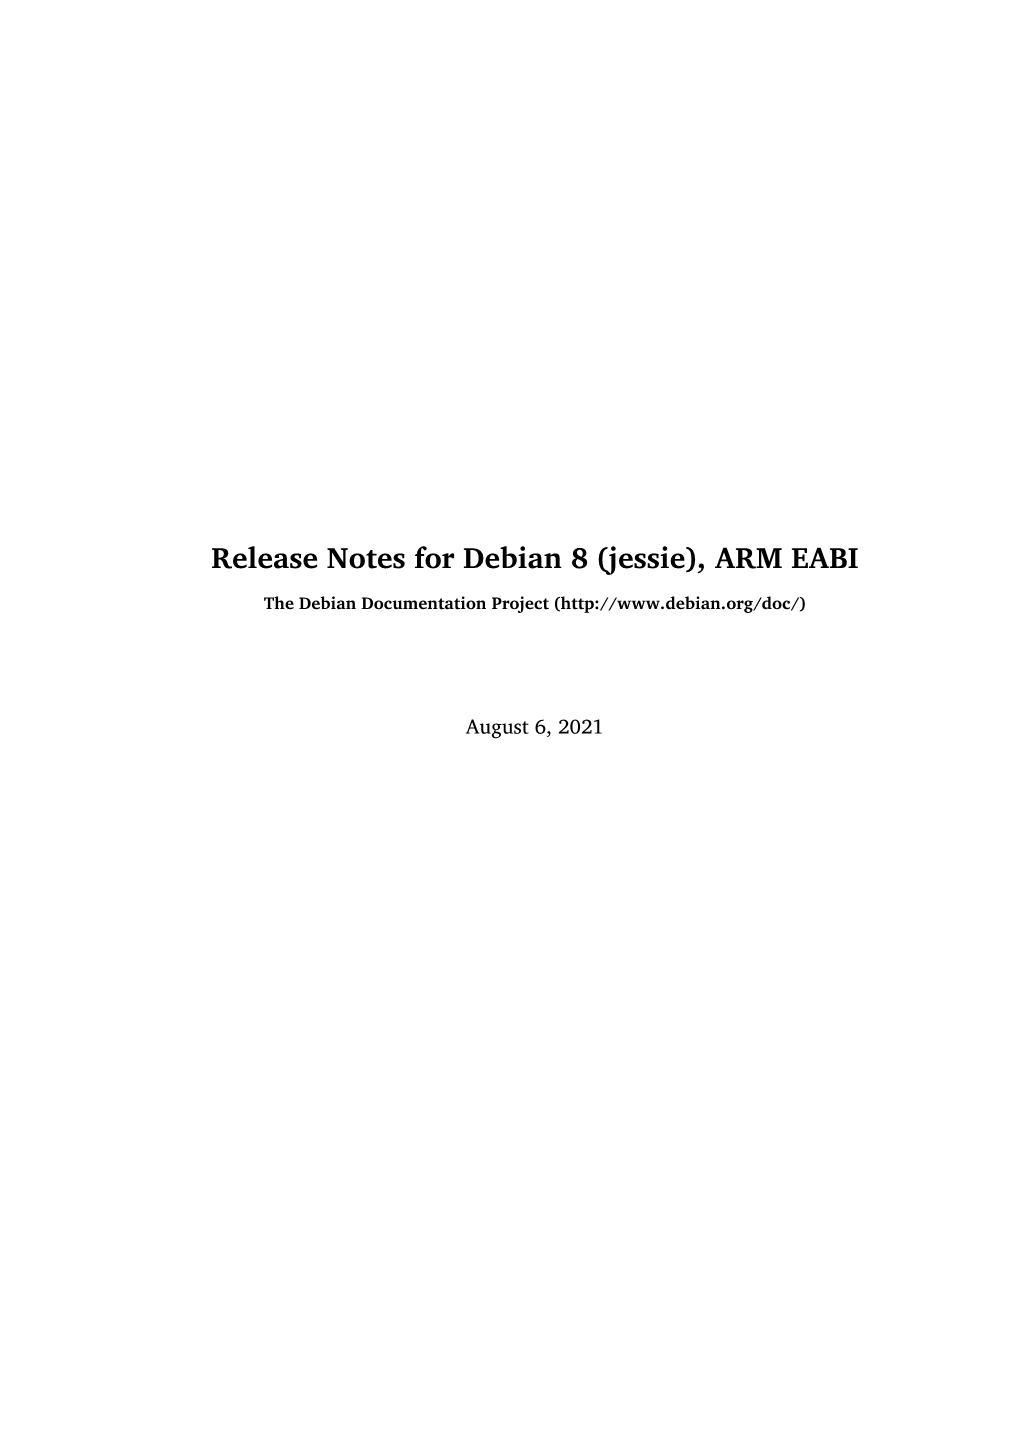 Release Notes for Debian 8 (Jessie), ARM EABI